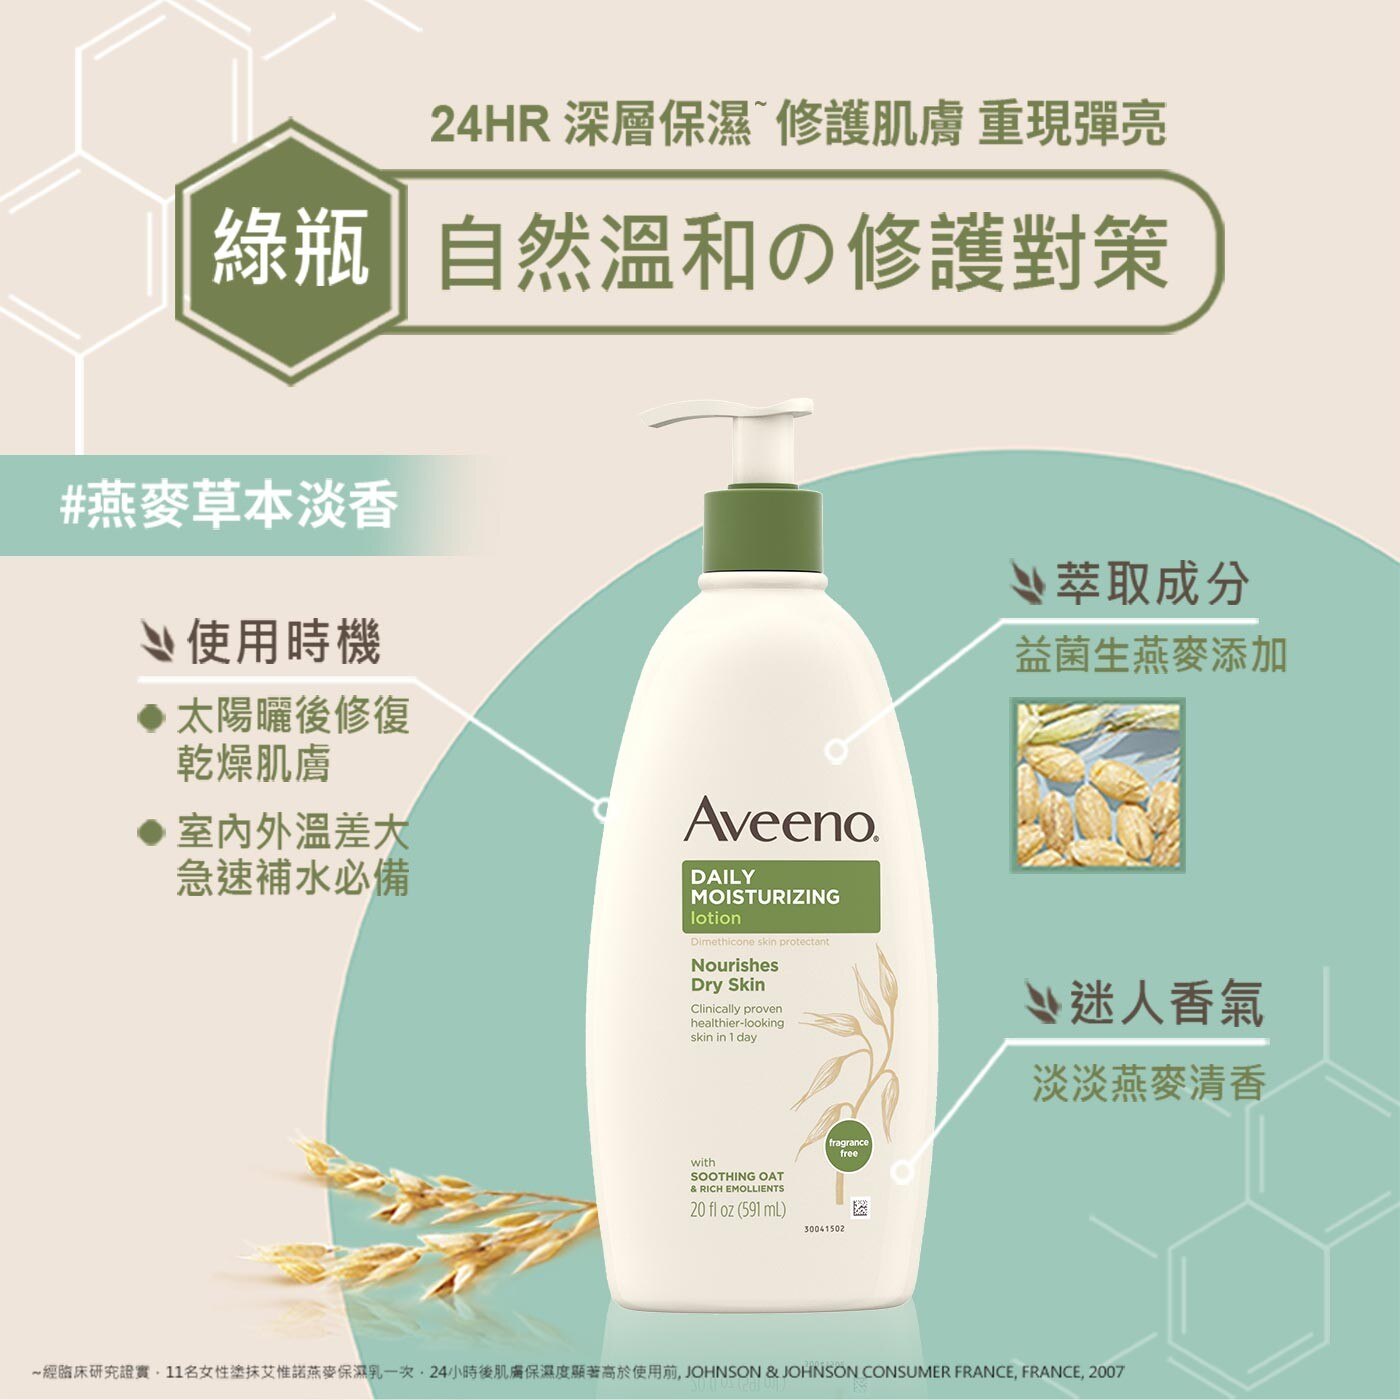 Aveeno 艾惟諾燕麥保濕乳液(綠瓶)，有效舒緩敏感肌膚問題，太陽曬後修復乾燥肌膚、室內外溫差大急速補水必備。益菌生燕麥添加，淡淡燕麥草本清香。